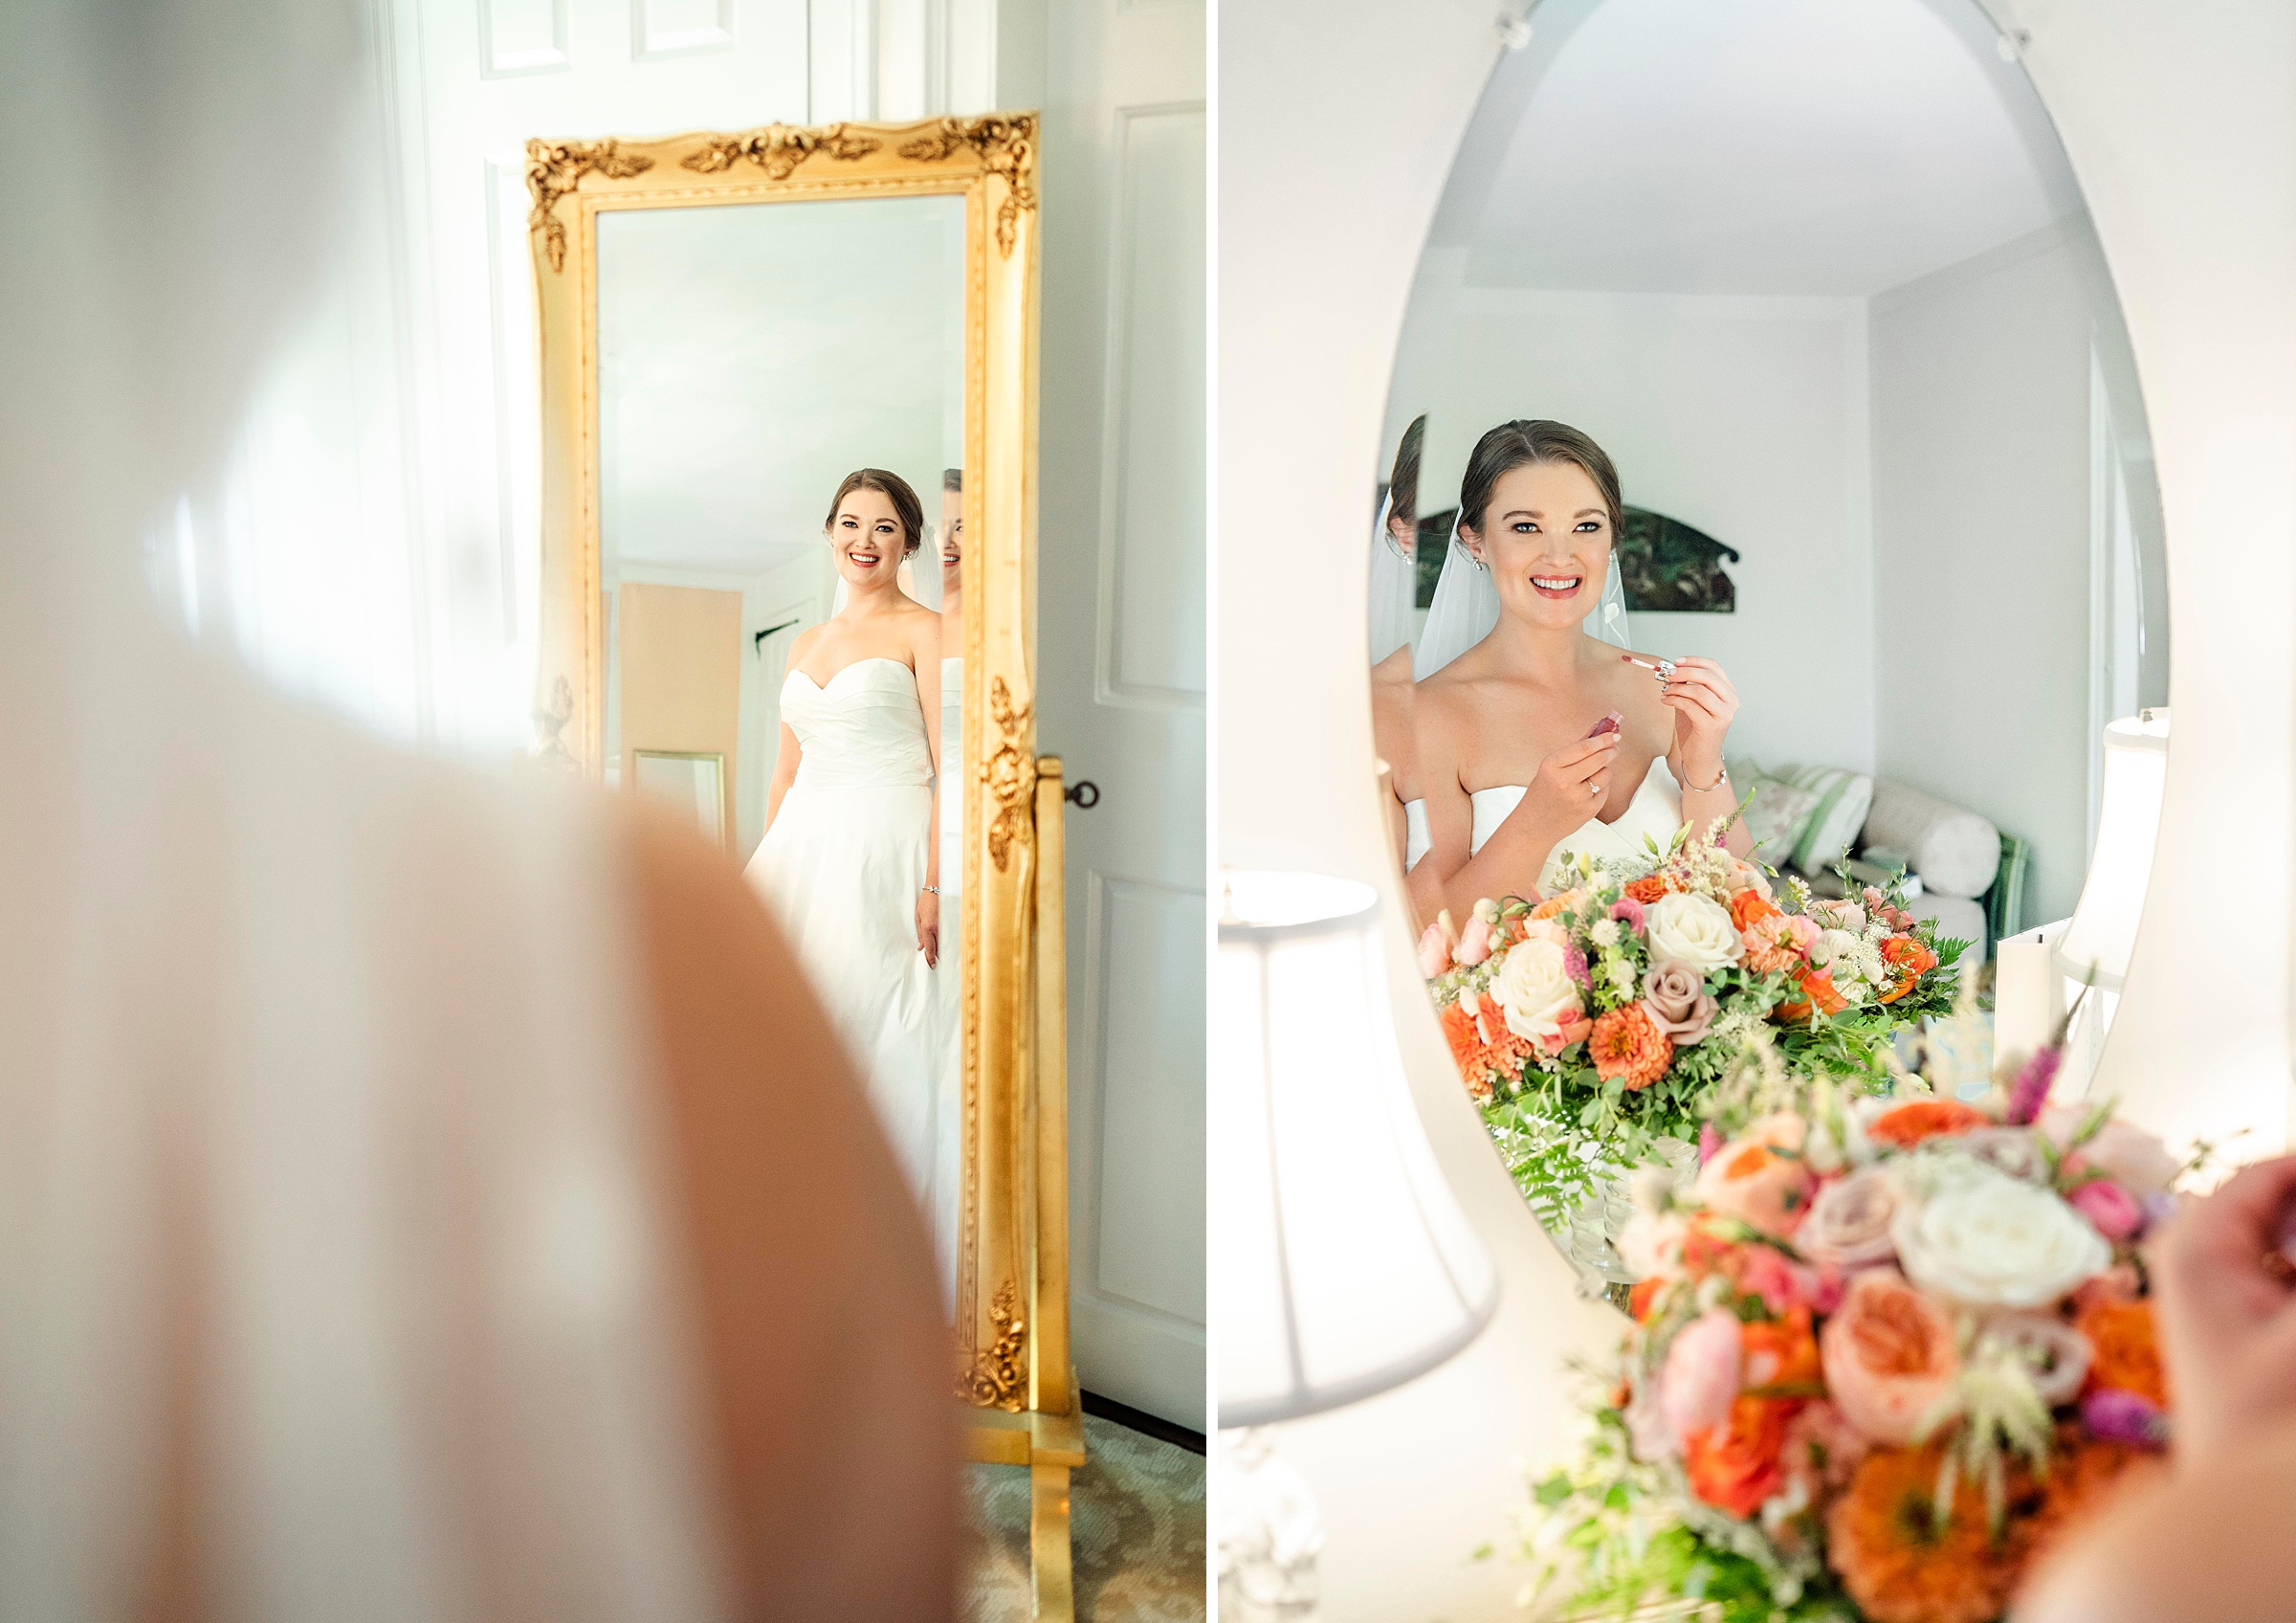 Dreamy & Vibrant Wedding at Appleford Estate | bride getting ready